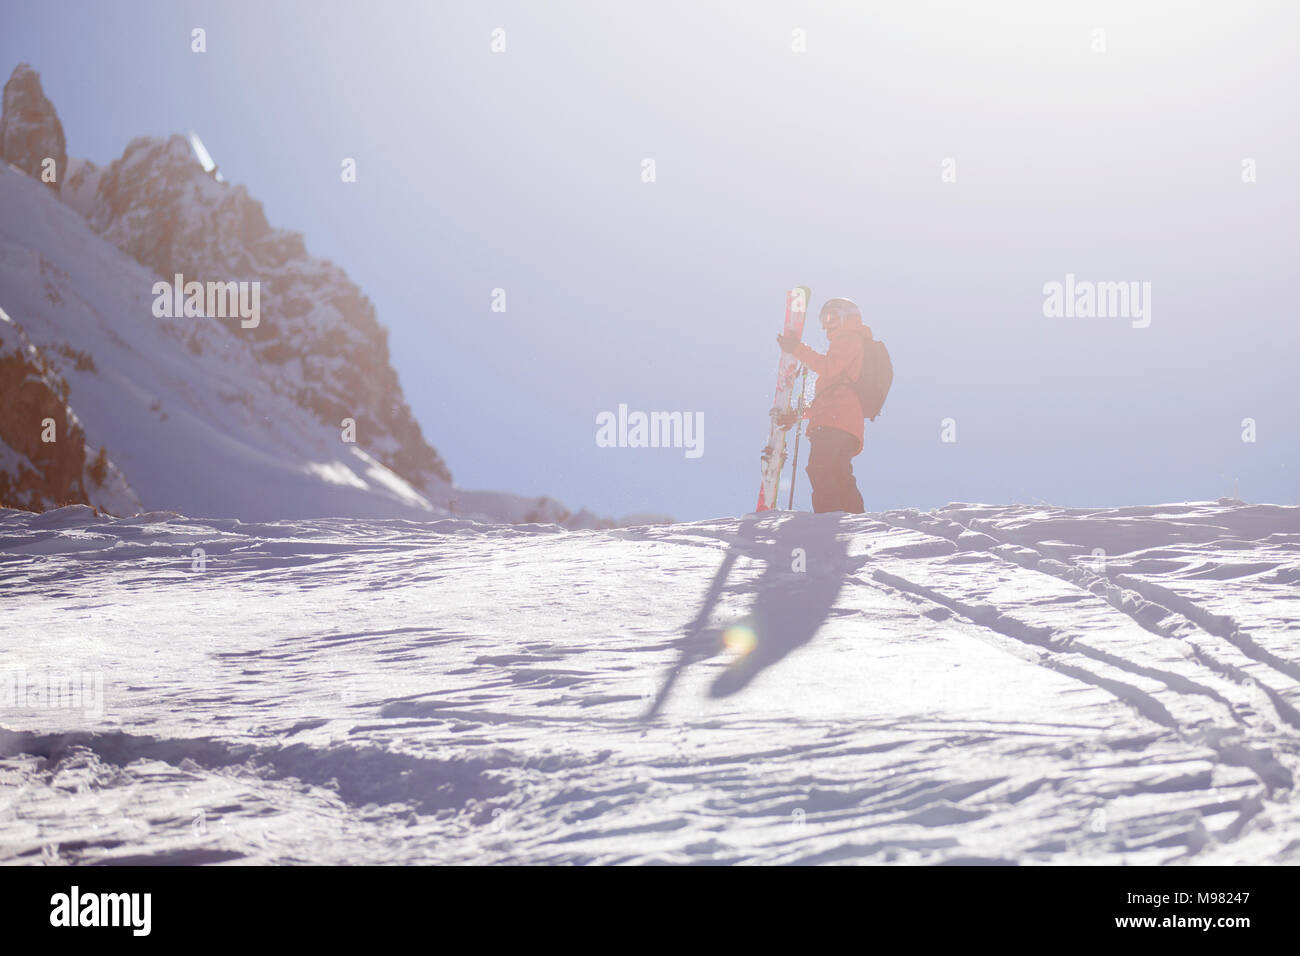 Austria, Tyrol, Mutters, freeride skier ascending mountain Stock Photo